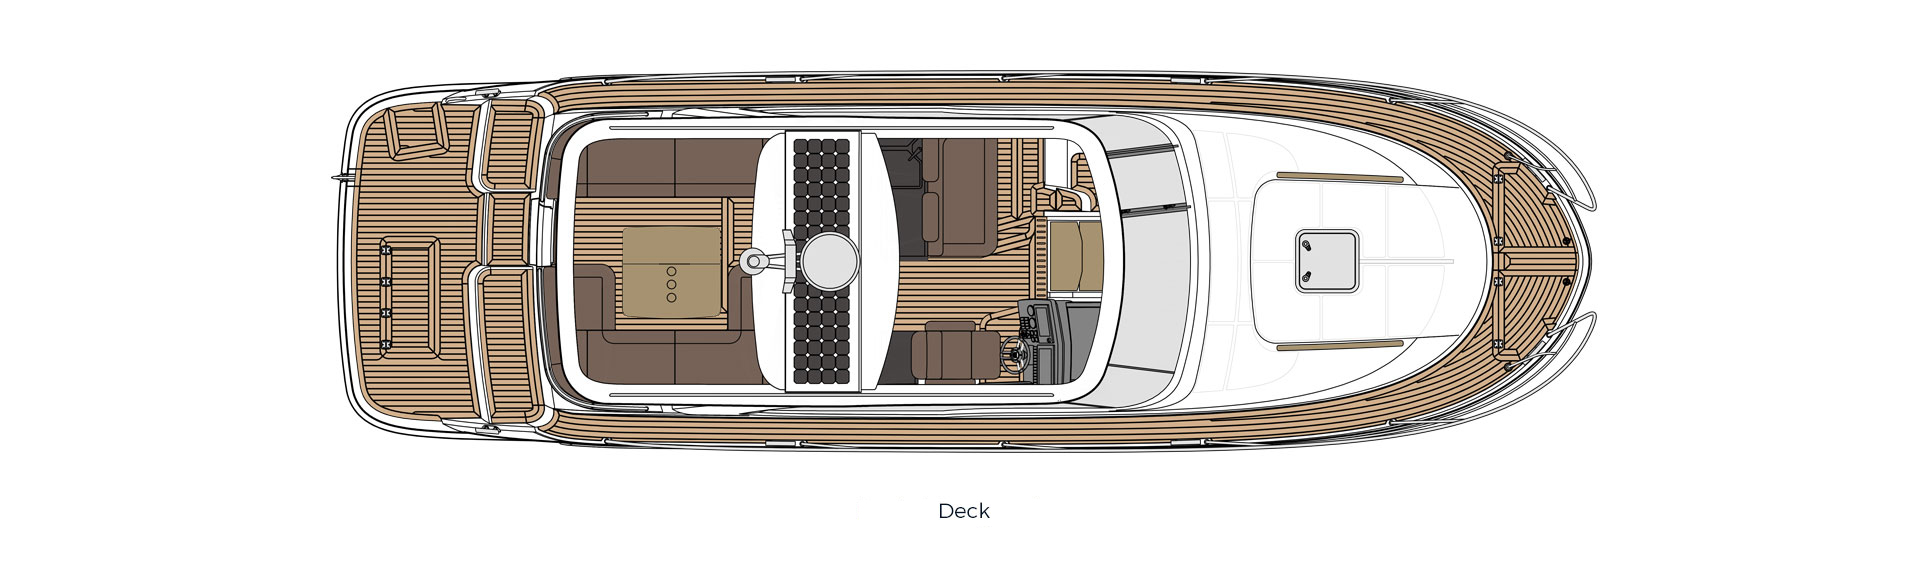 360cc decklayout deck